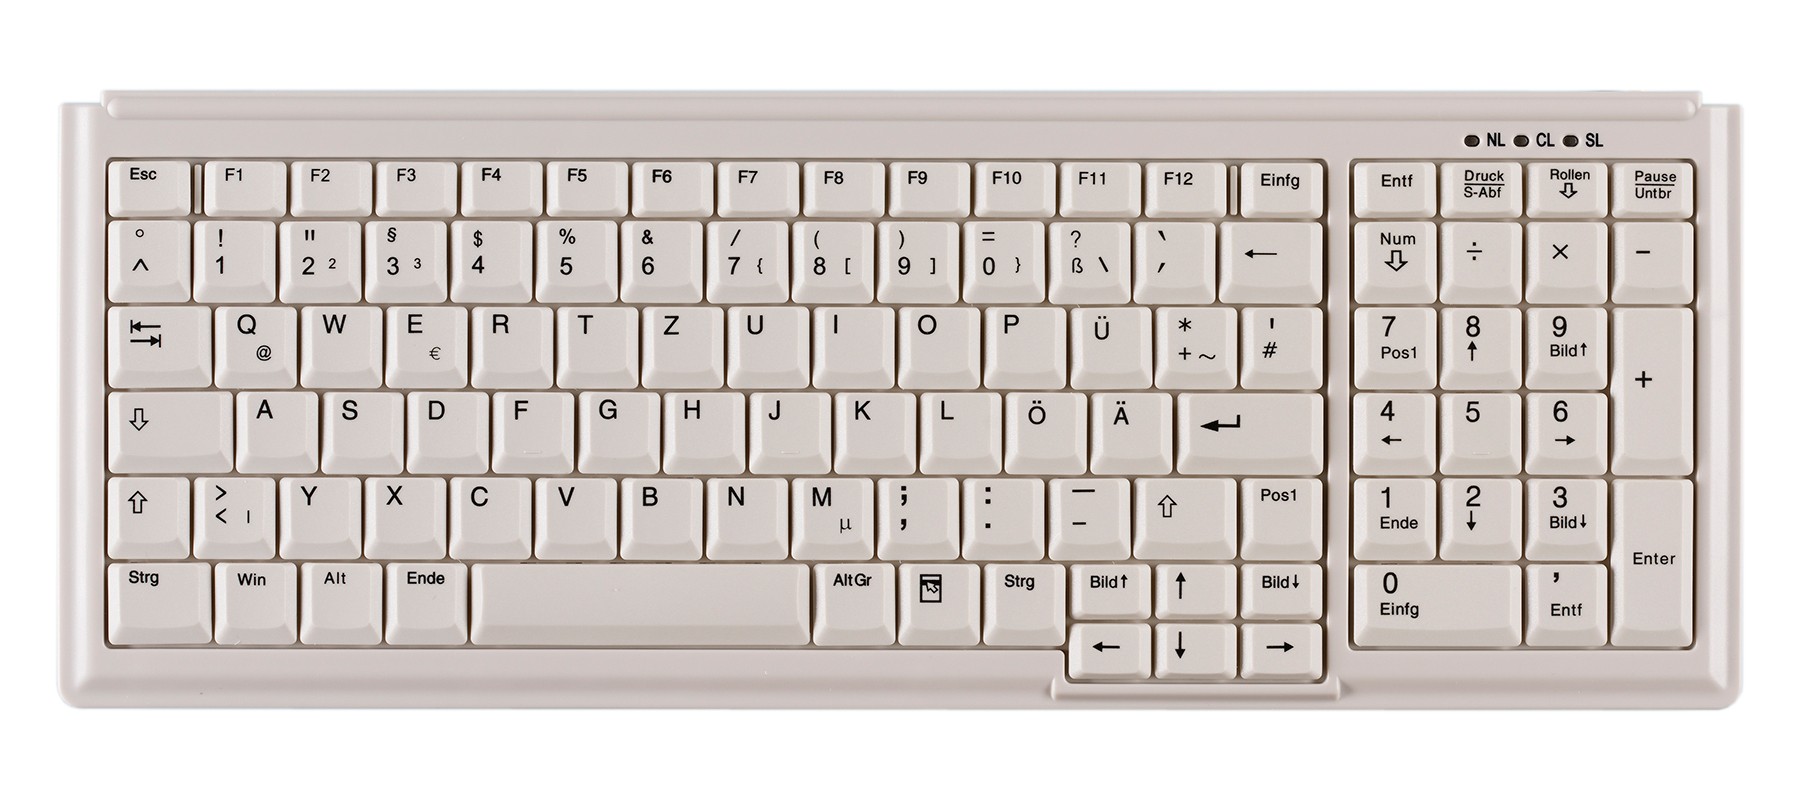 104 Key Notebook Style Keyboard with Numeric Pad, USB,Black,  Spanish layout